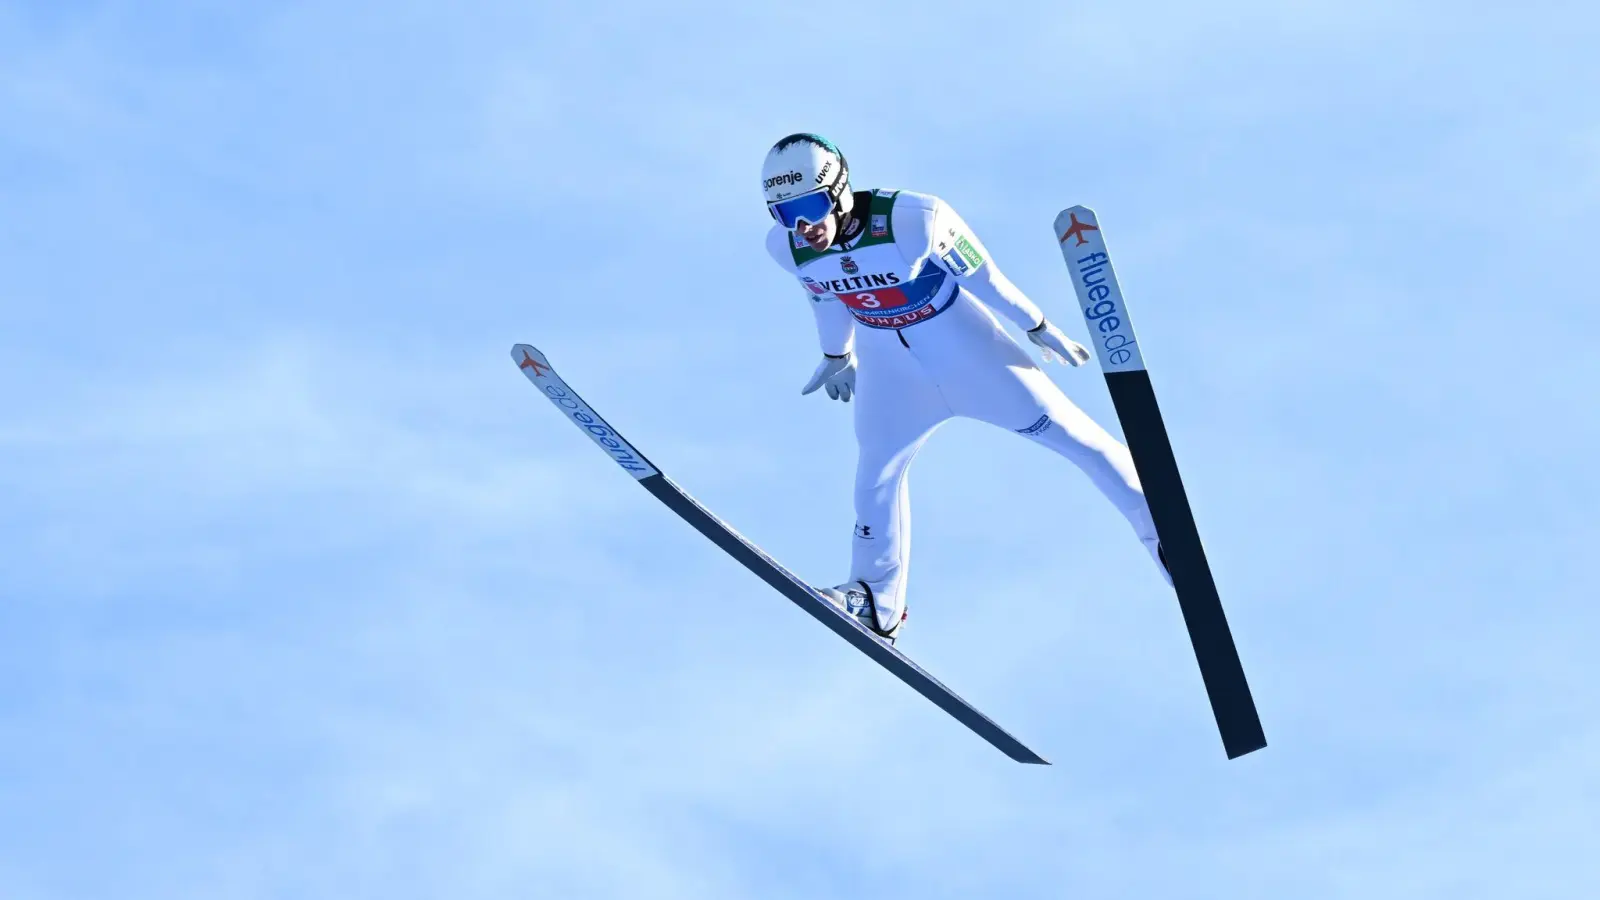 Der slowenische Skispringer Timi Zajc in Aktion. (Foto: Angelika Warmuth/dpa/Archivbild)